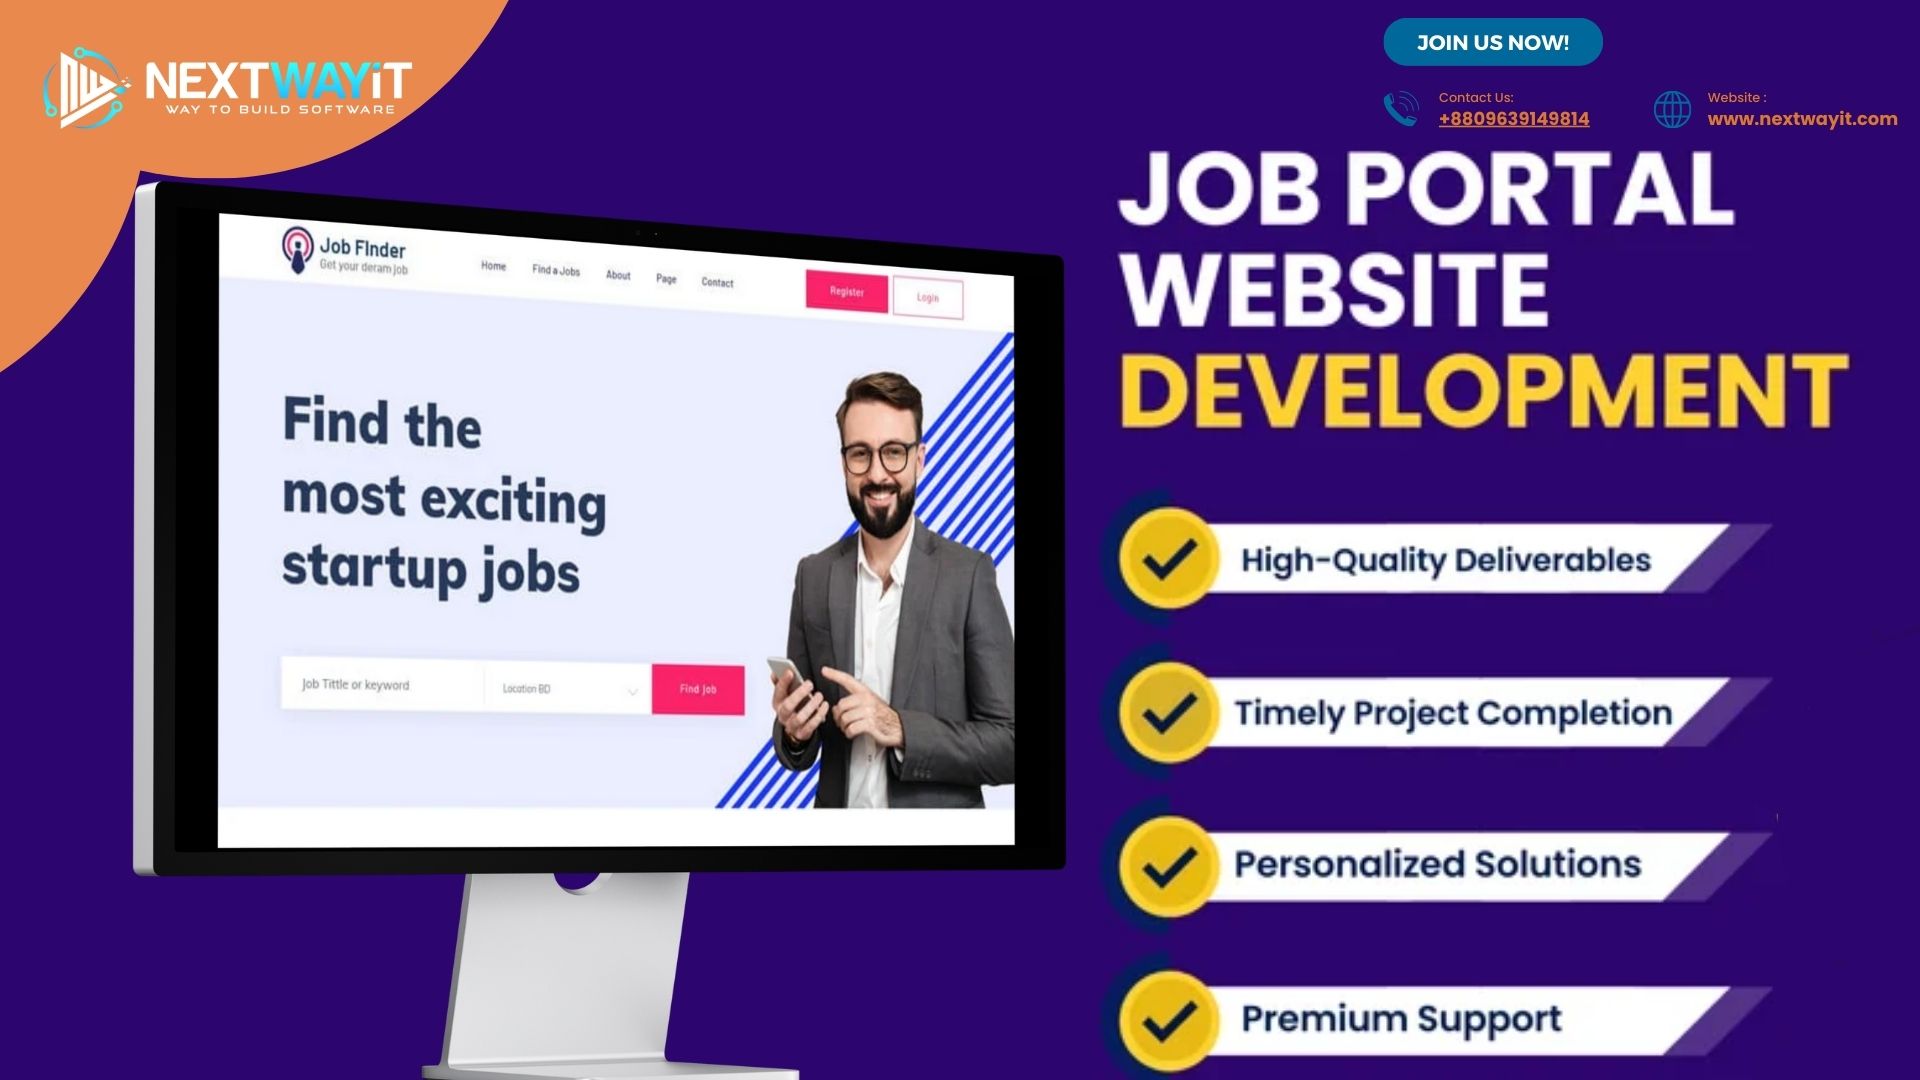 Job Portal Website Development Services